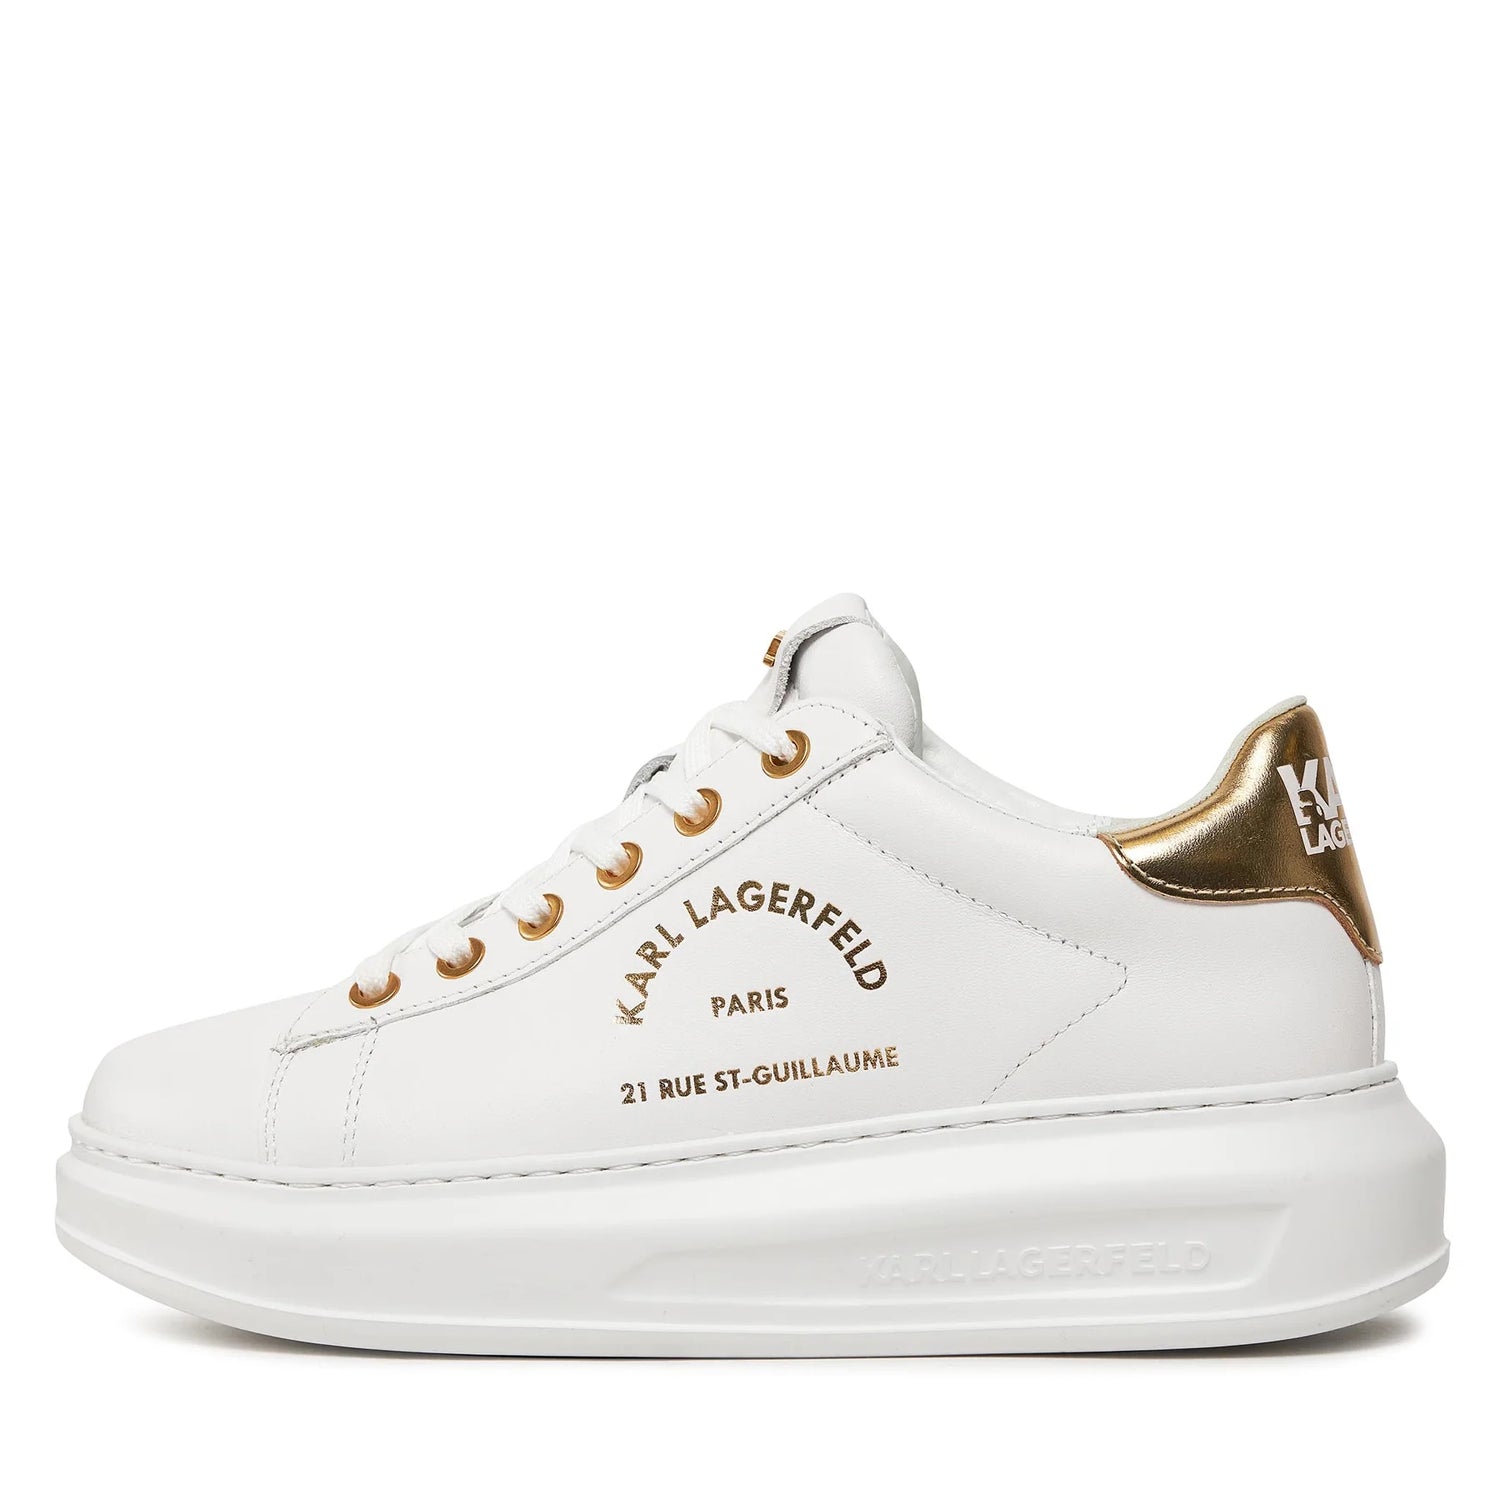 Karl Lagerfeld Sapatilhas Sneakers Shoes Kl62538 Whi Gold Branco Dourado_shot5